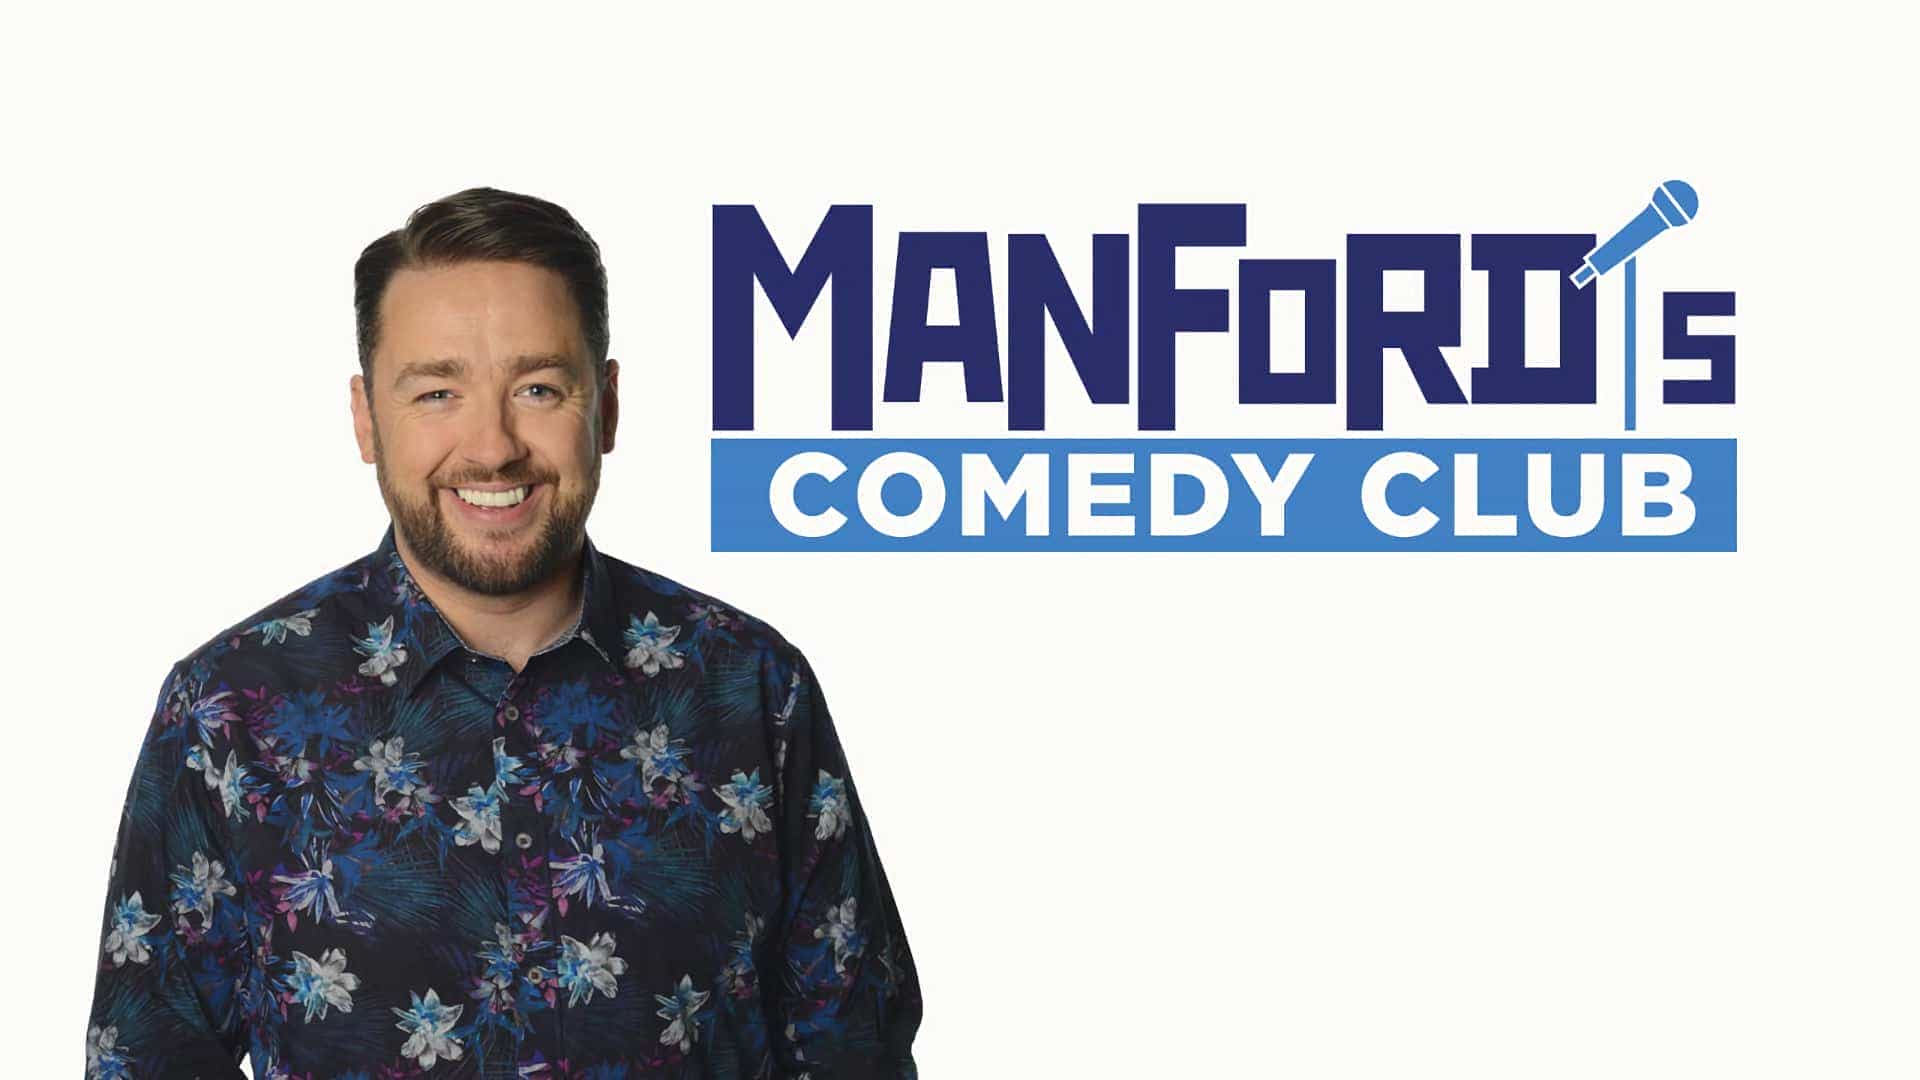 Manford's Comedy Club